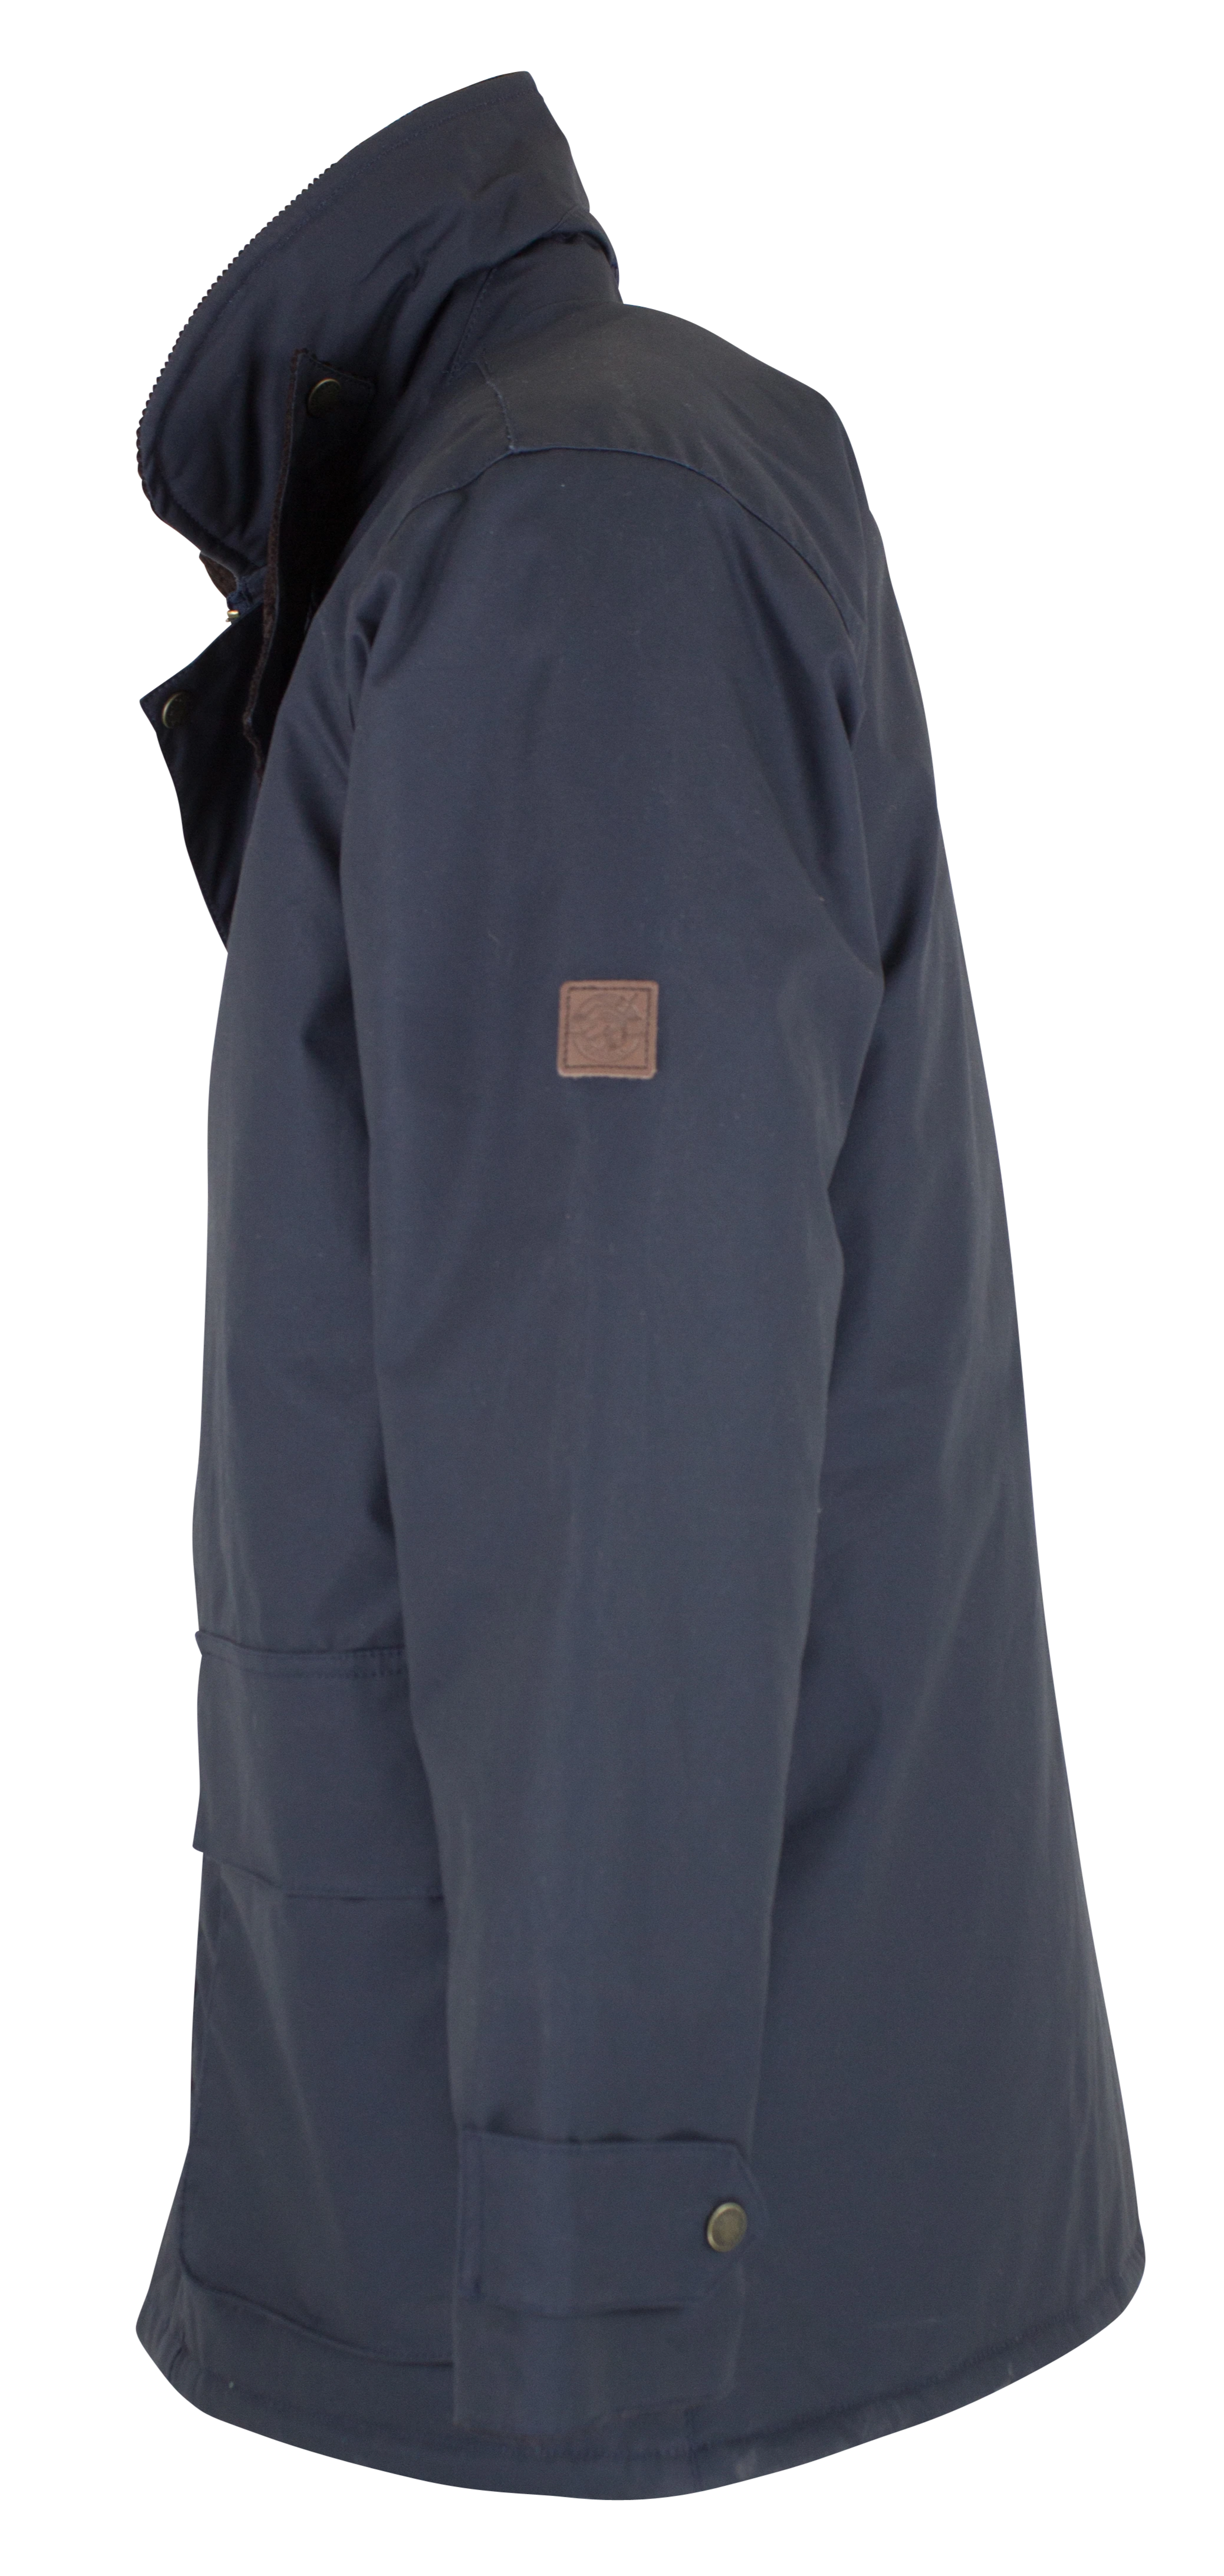 W18 - Men's Knightsbridge Staywax Jacket - NAVY - Oxford Blue